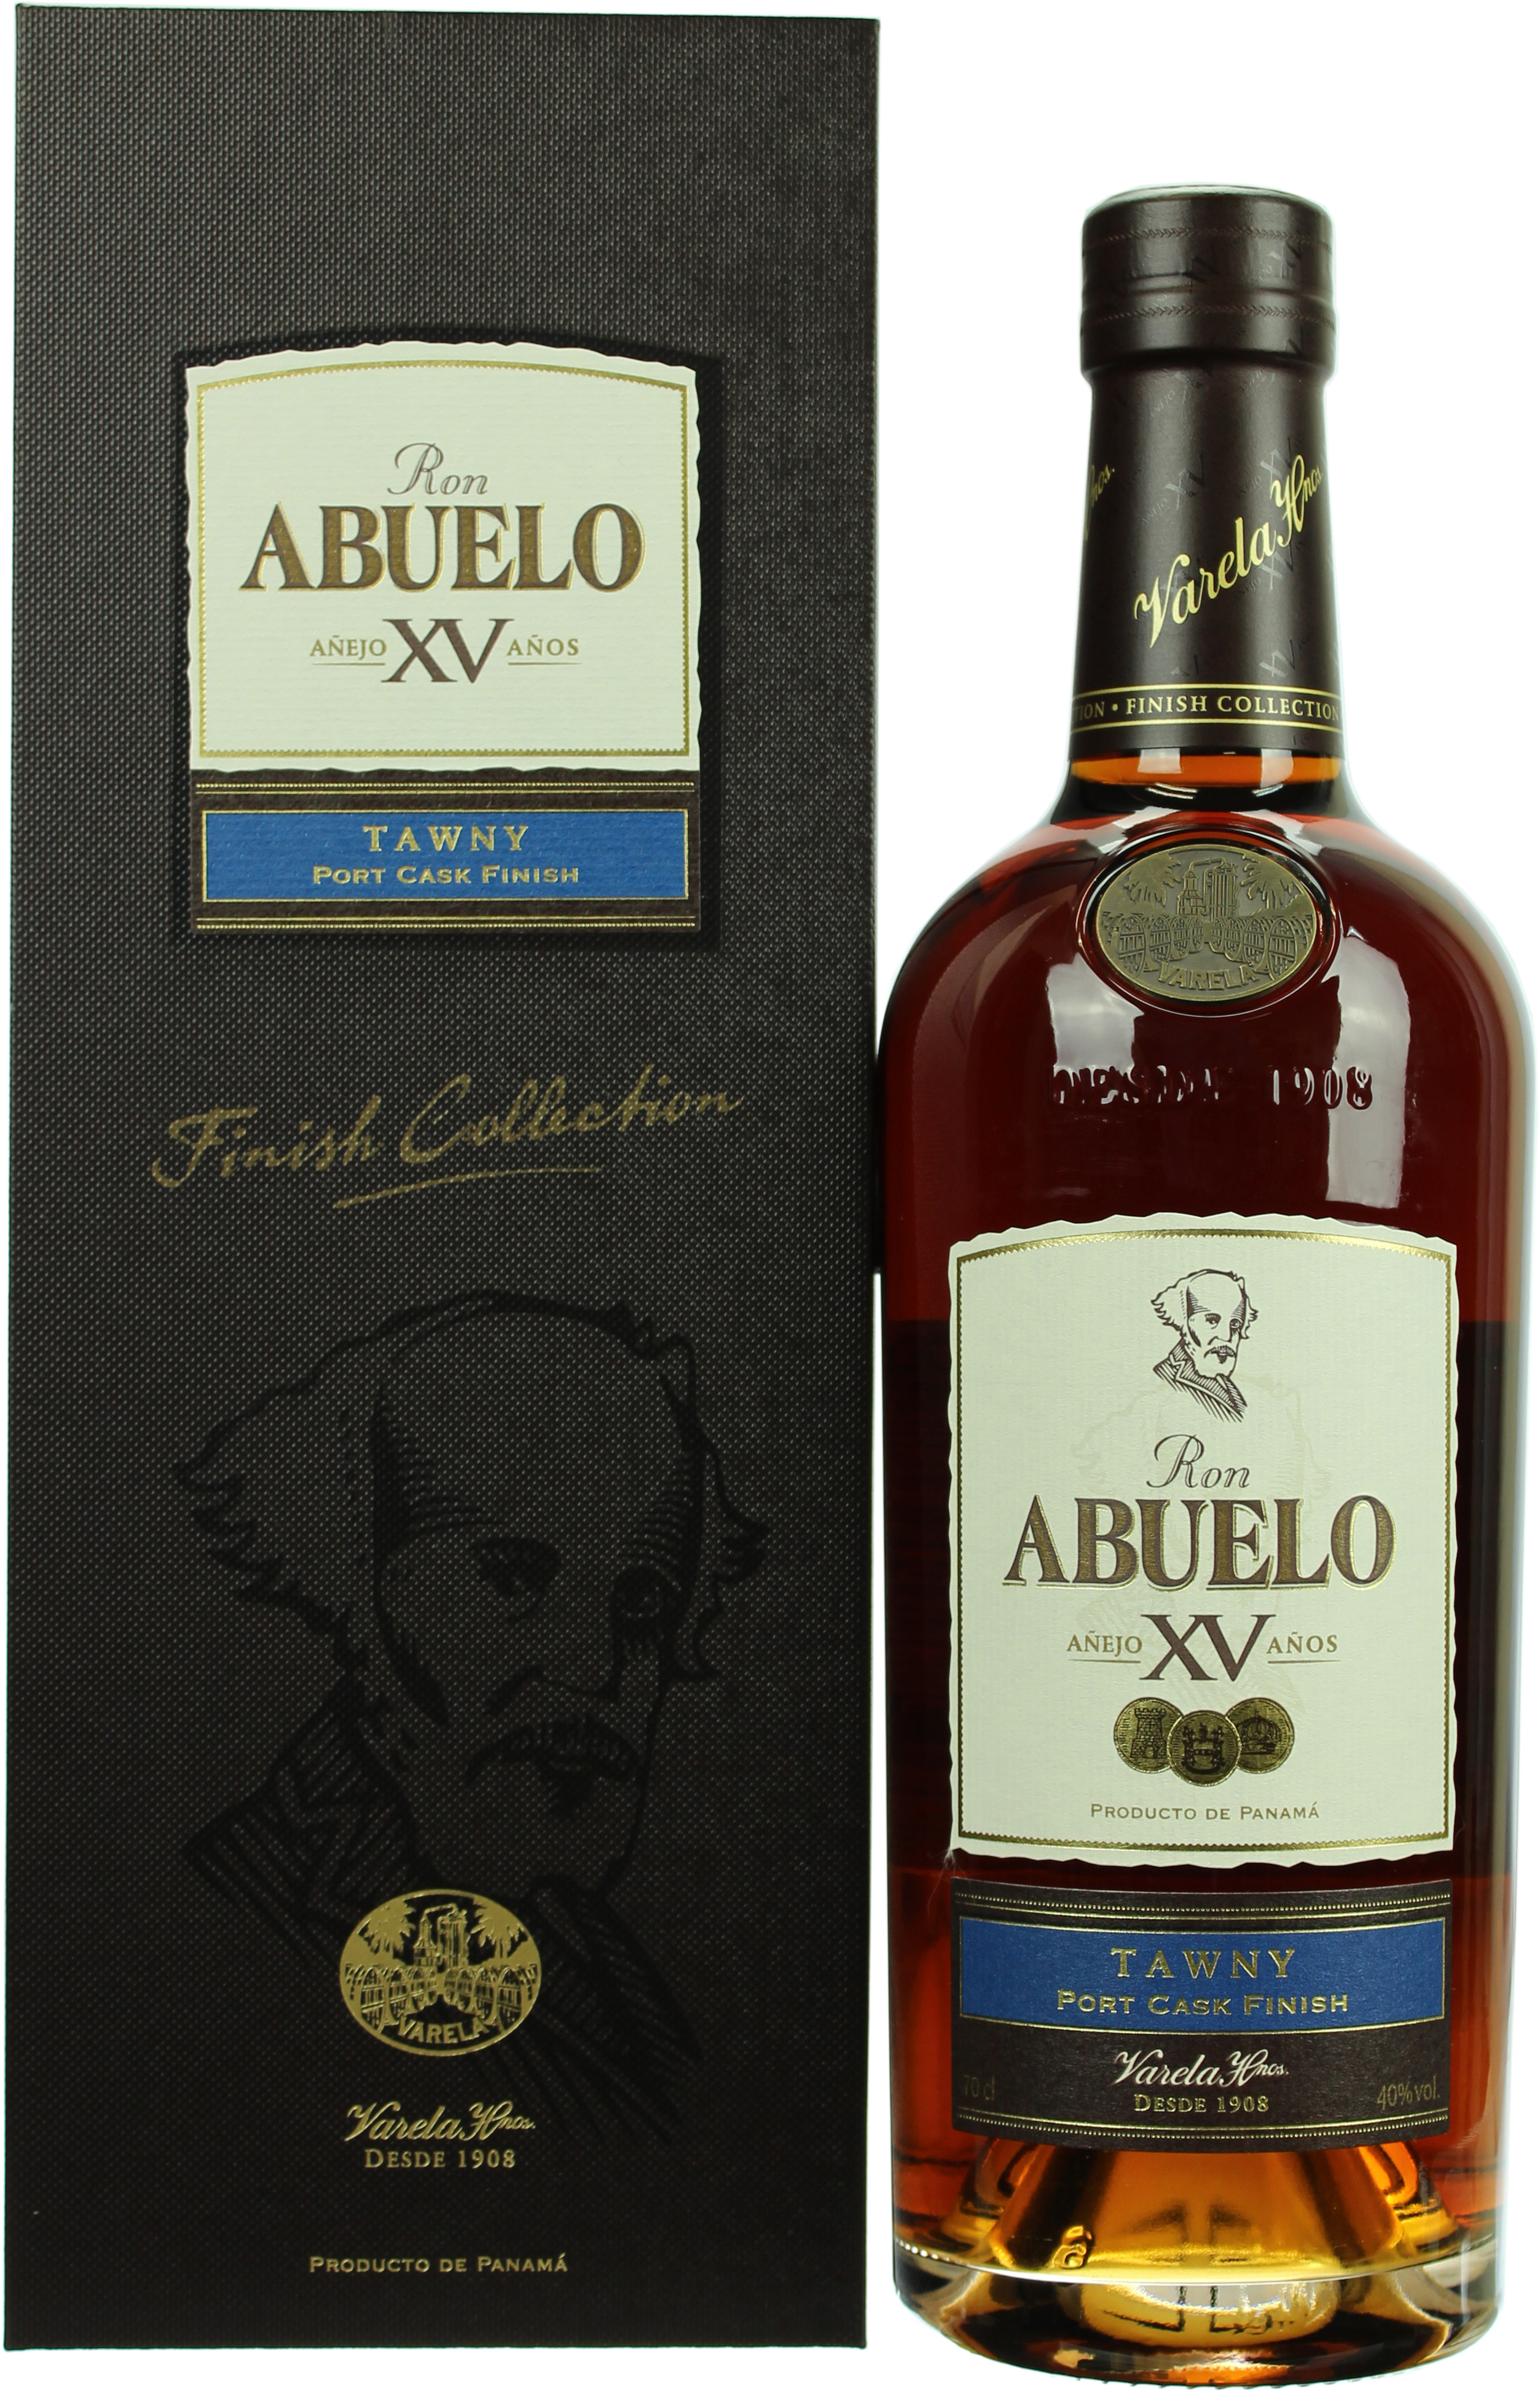 Abuelo 15 Jahre Tawny Port Finish Rum 40.0% 0,7l